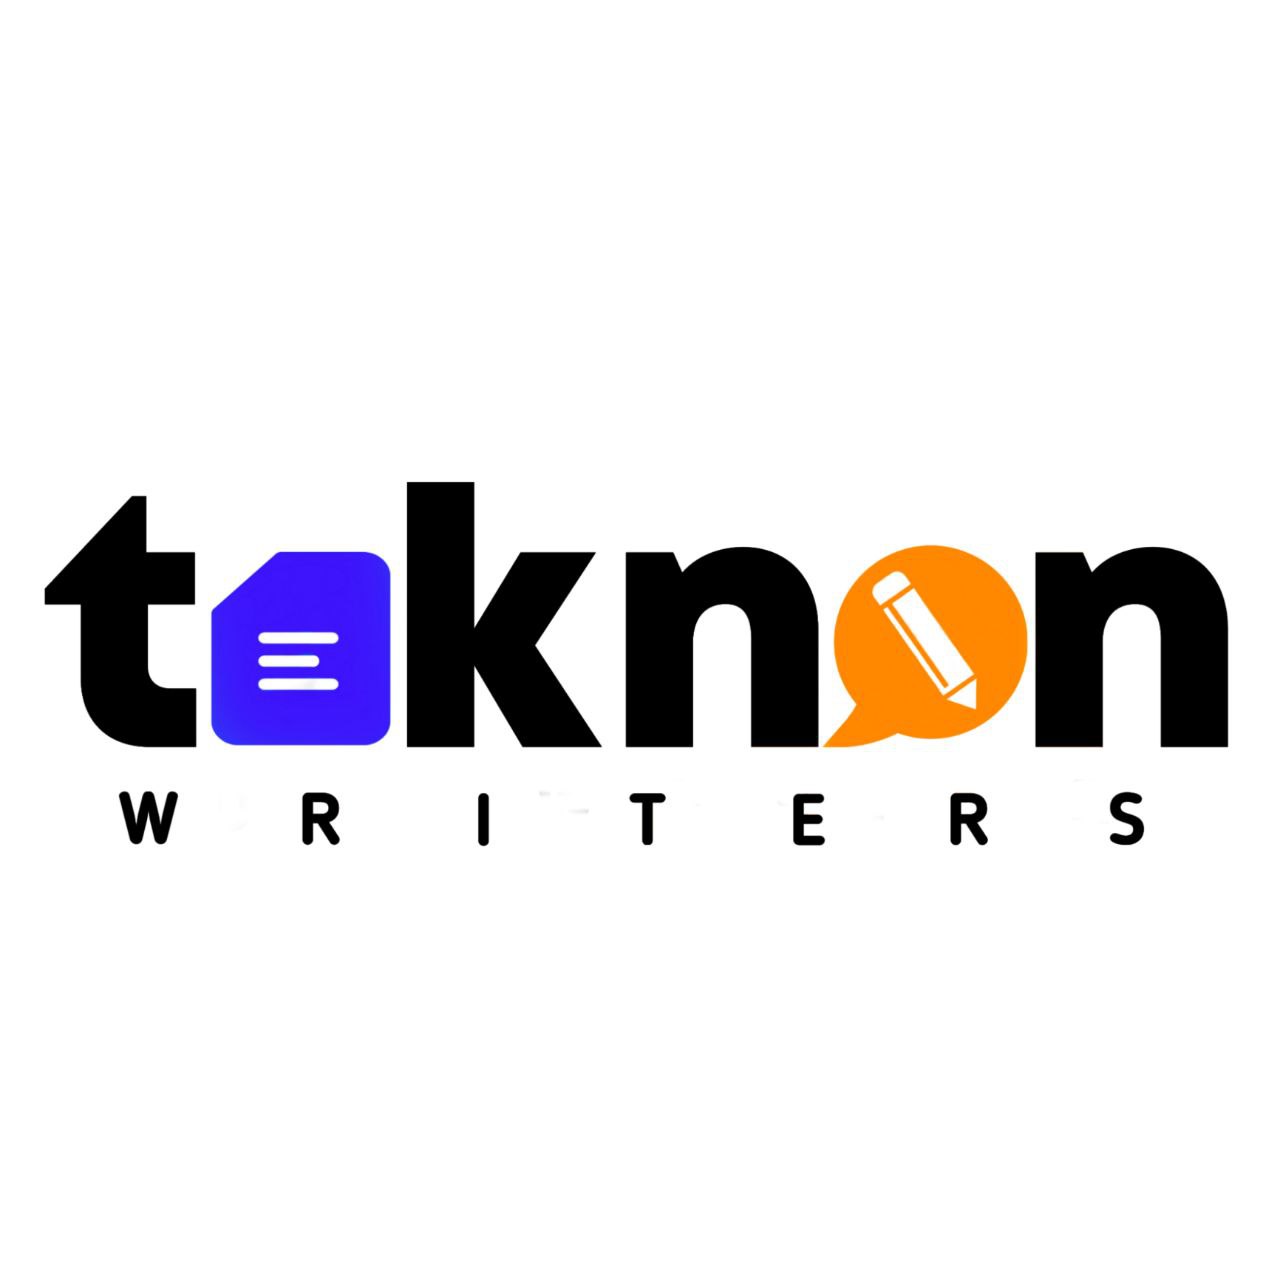 TeknonWriters Logo